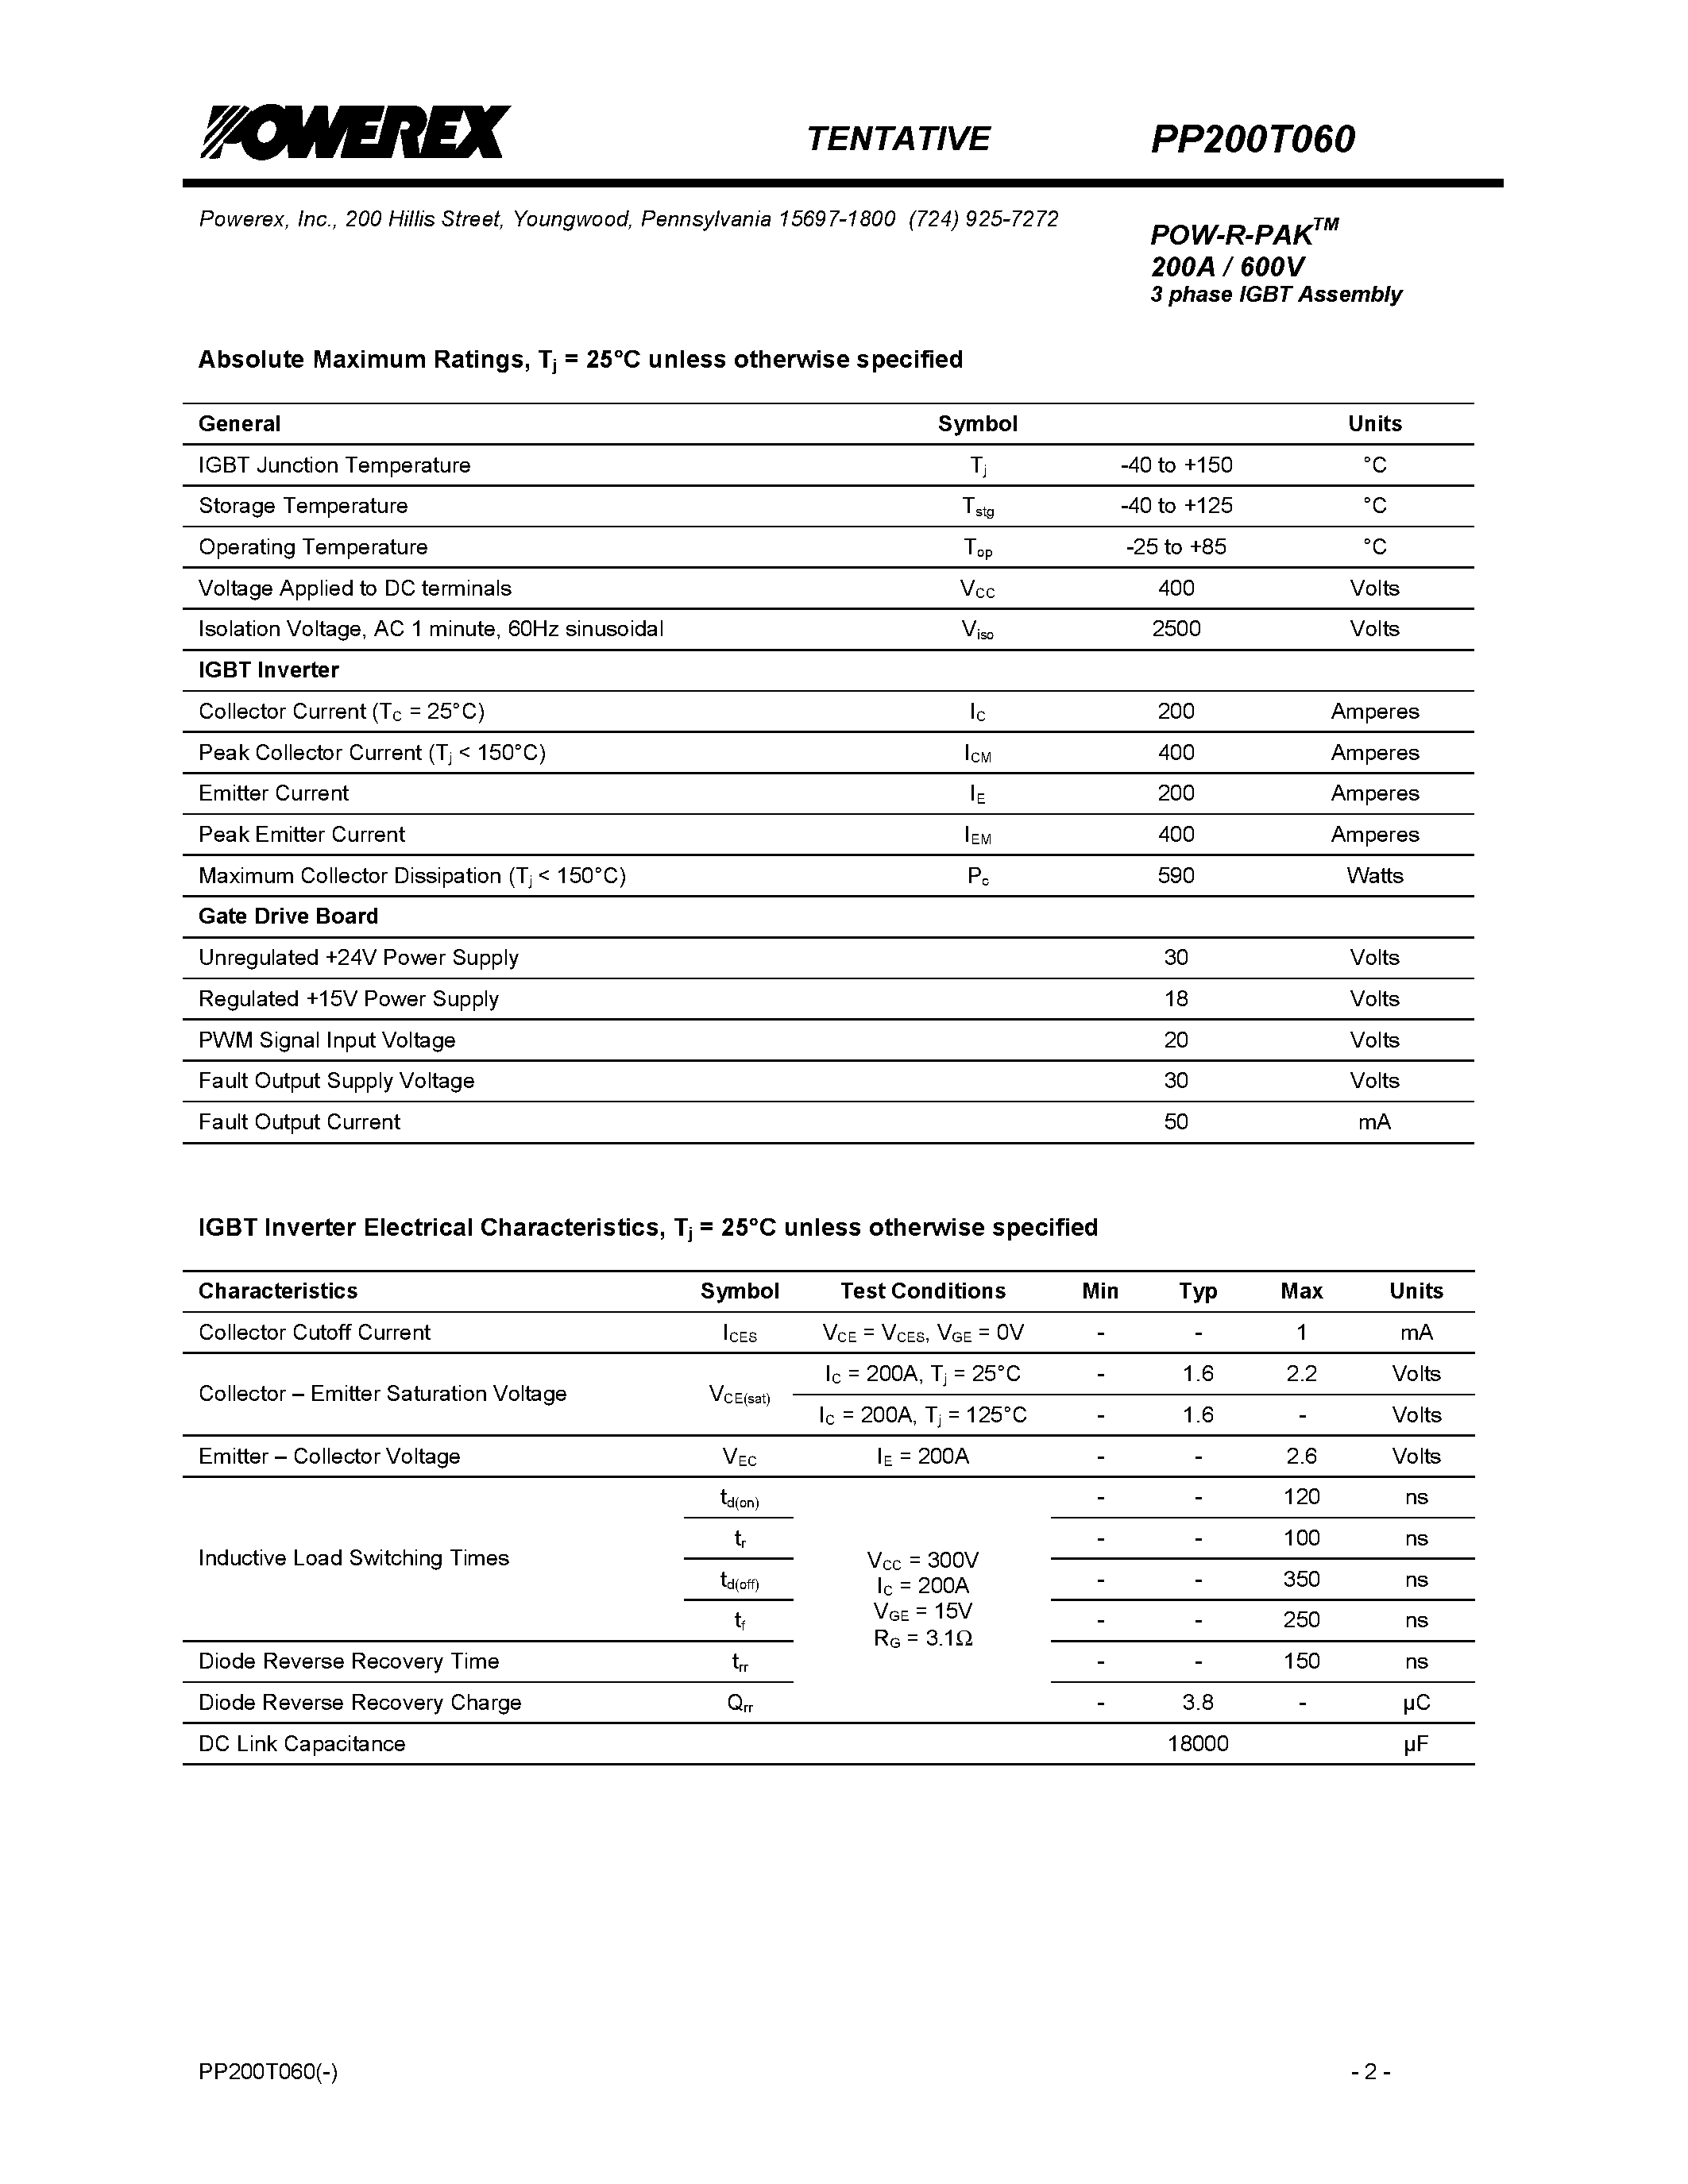 Datasheet PP200T060 - POW-R-PAK 200A / 600V 3 phase IGBT Assembly page 2